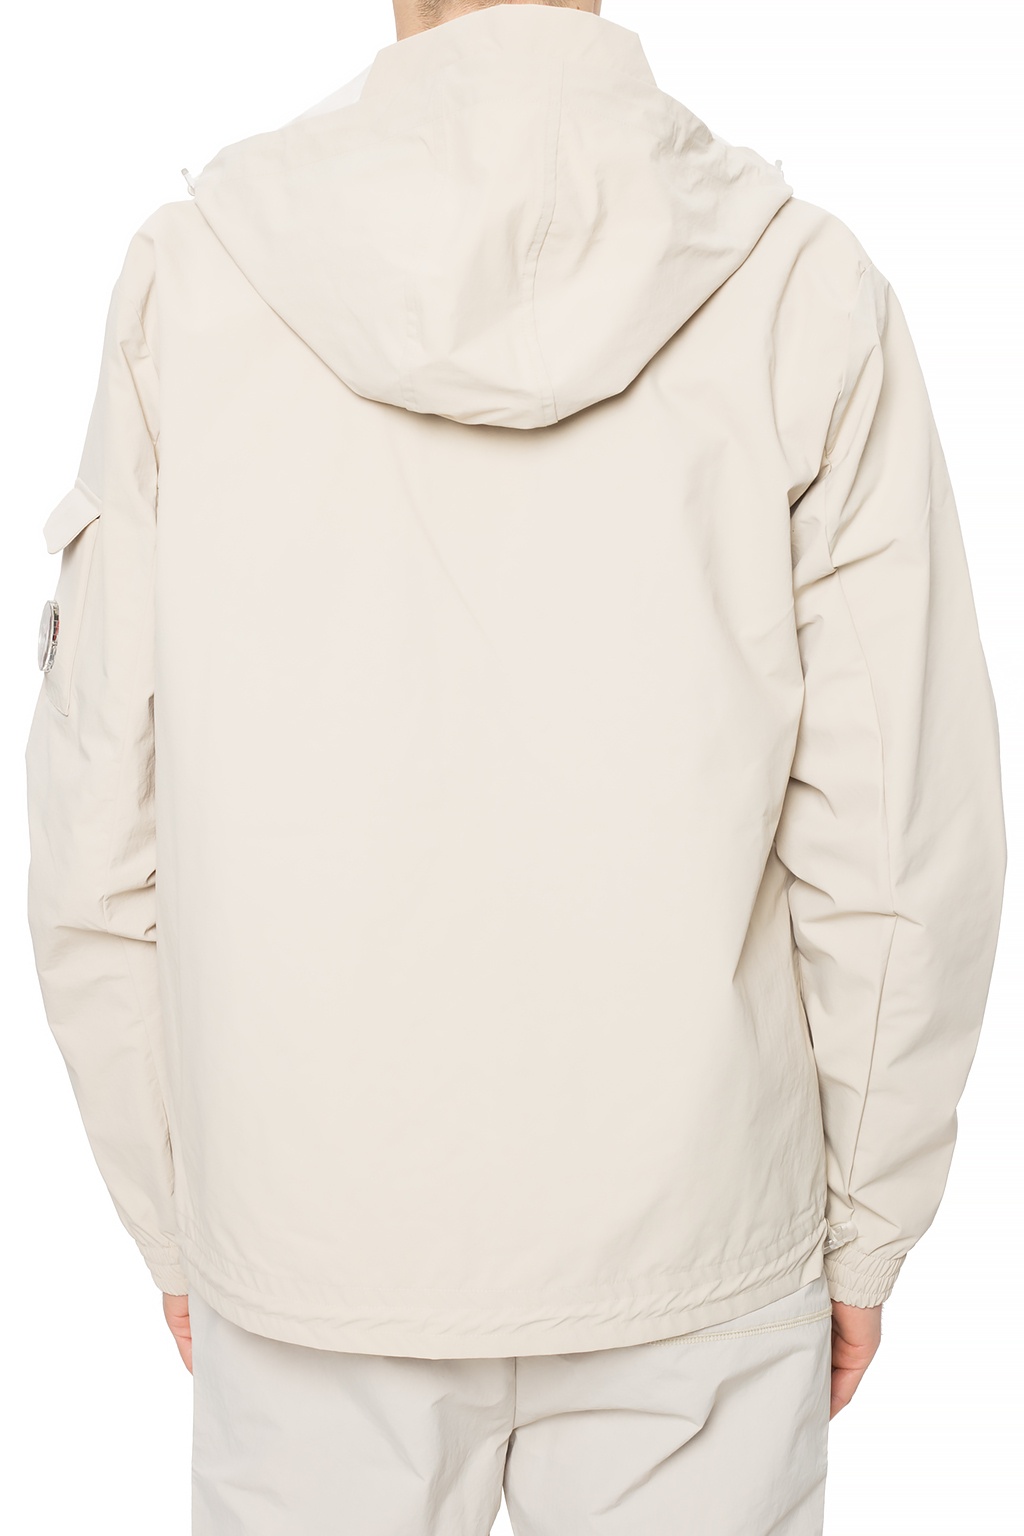 A-COLD-WALL* Rain jacket with logo